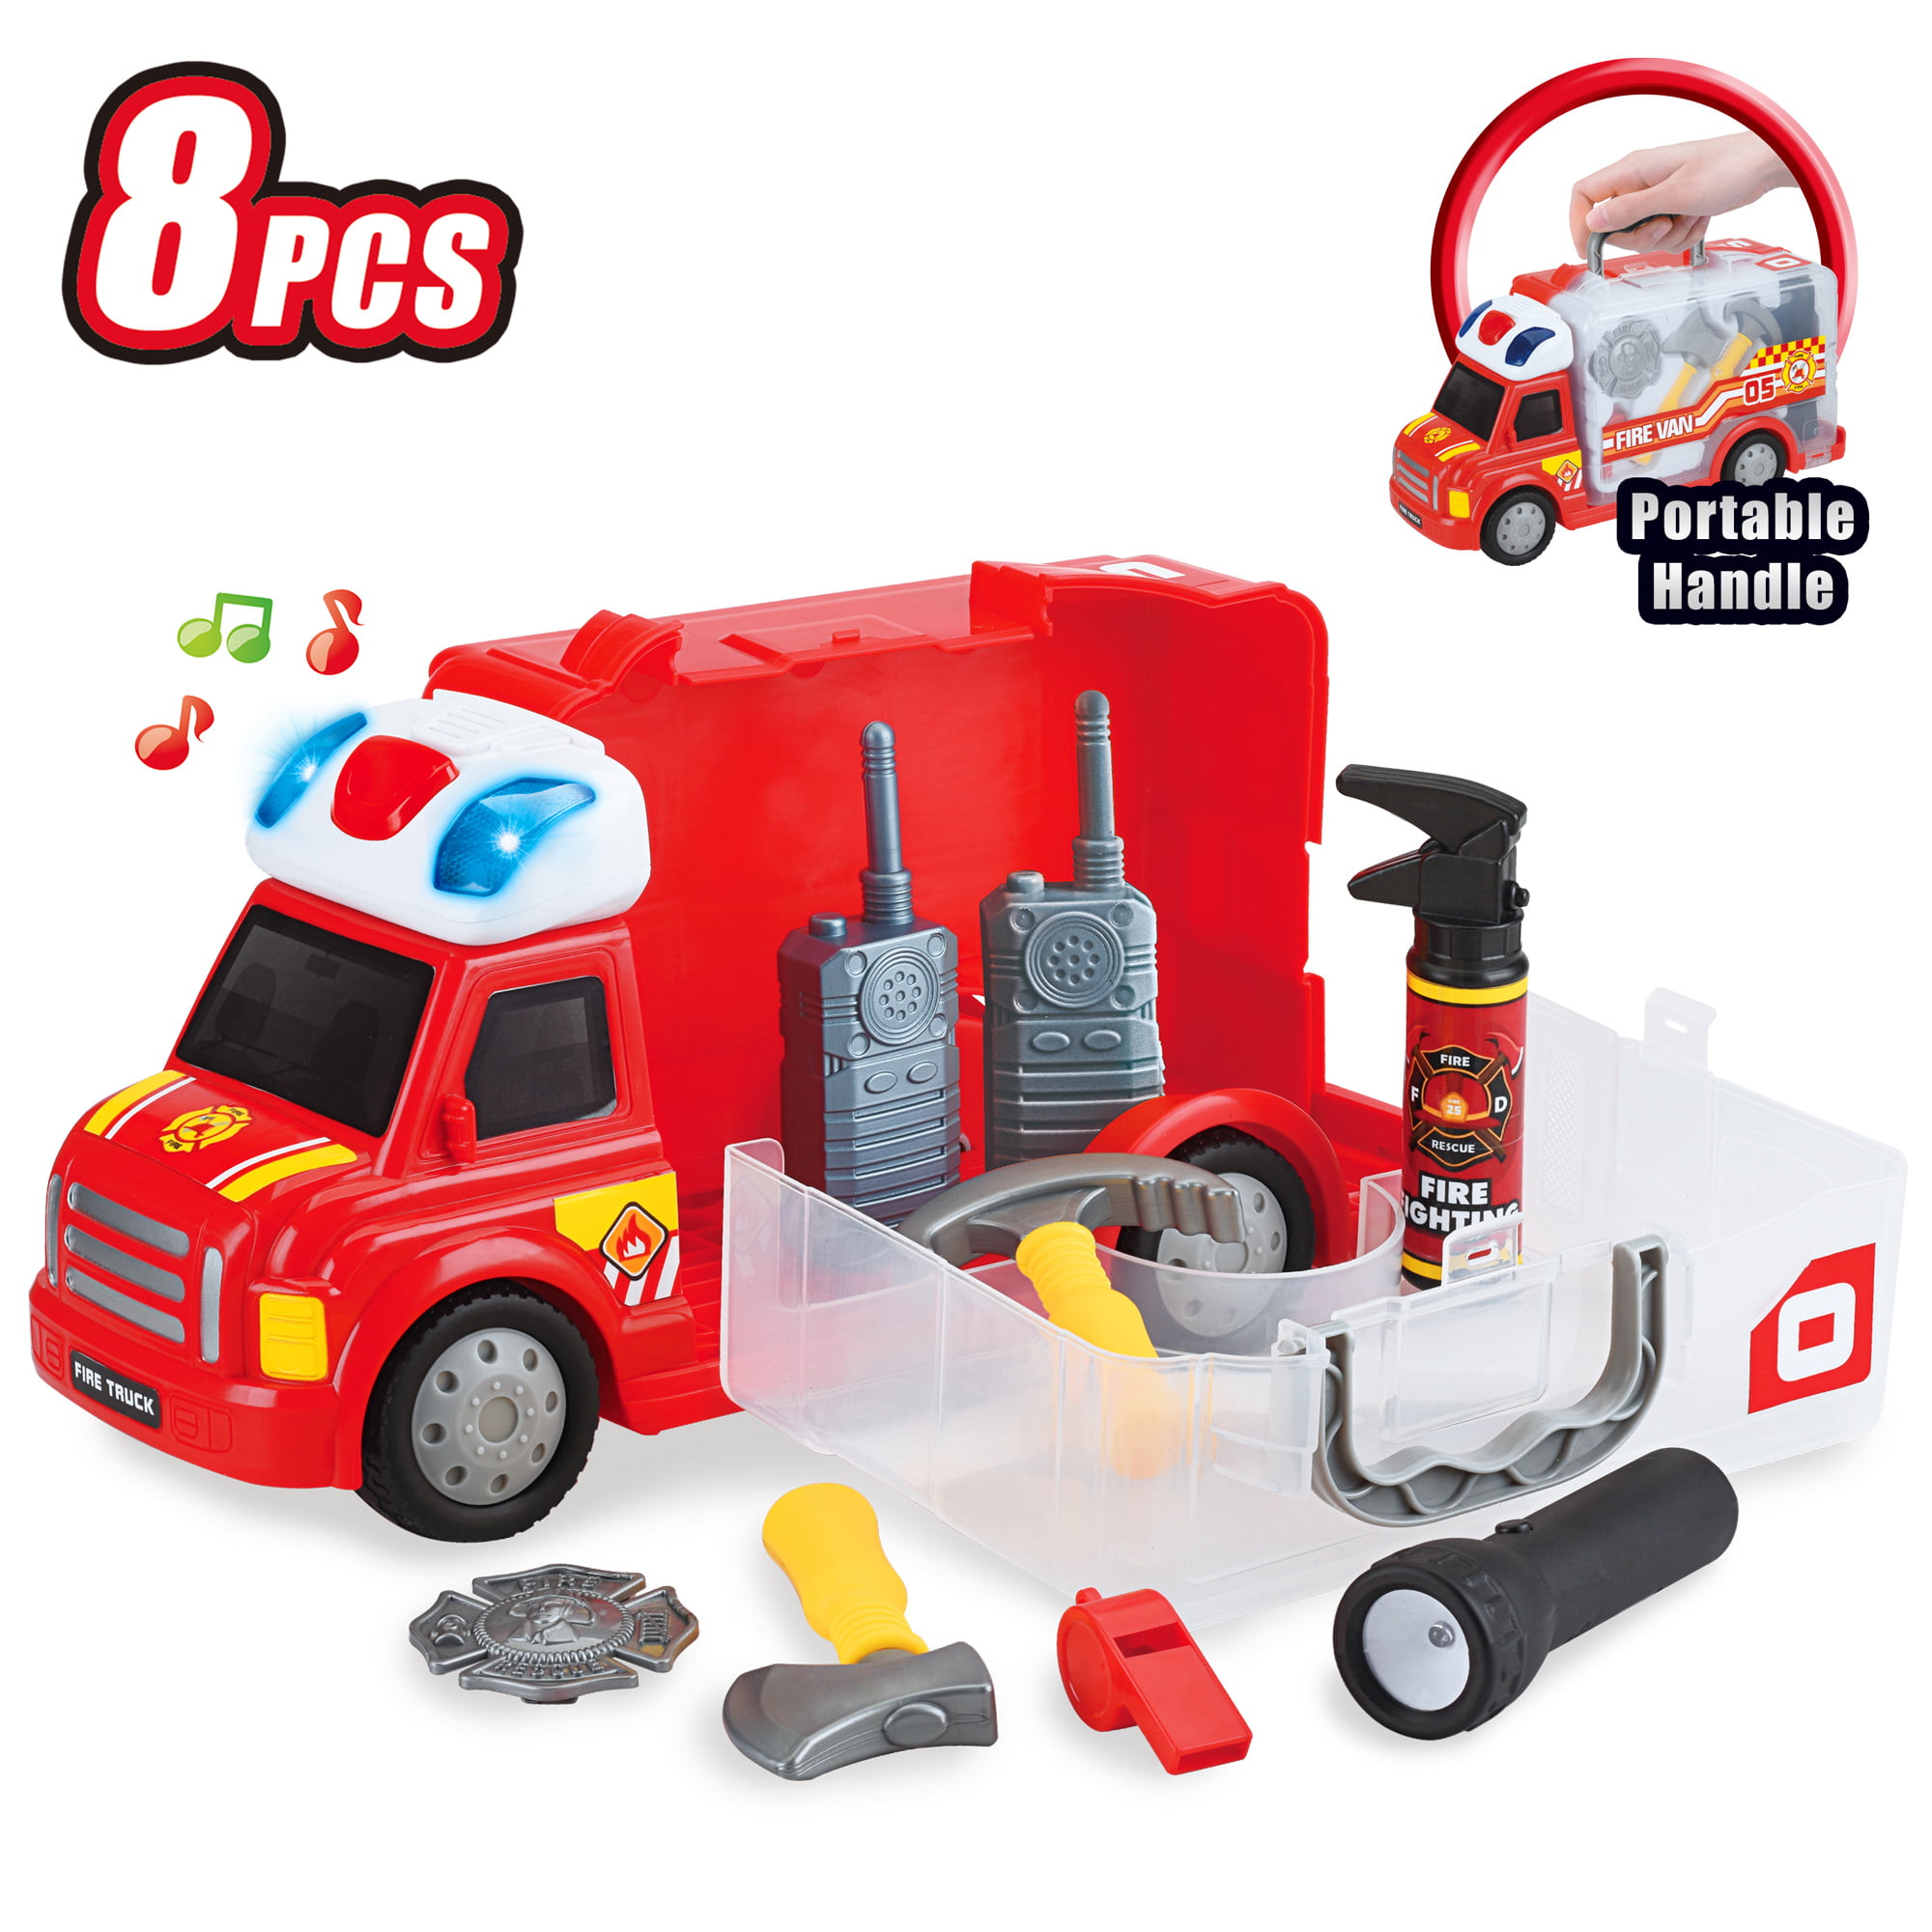 a toy fire truck